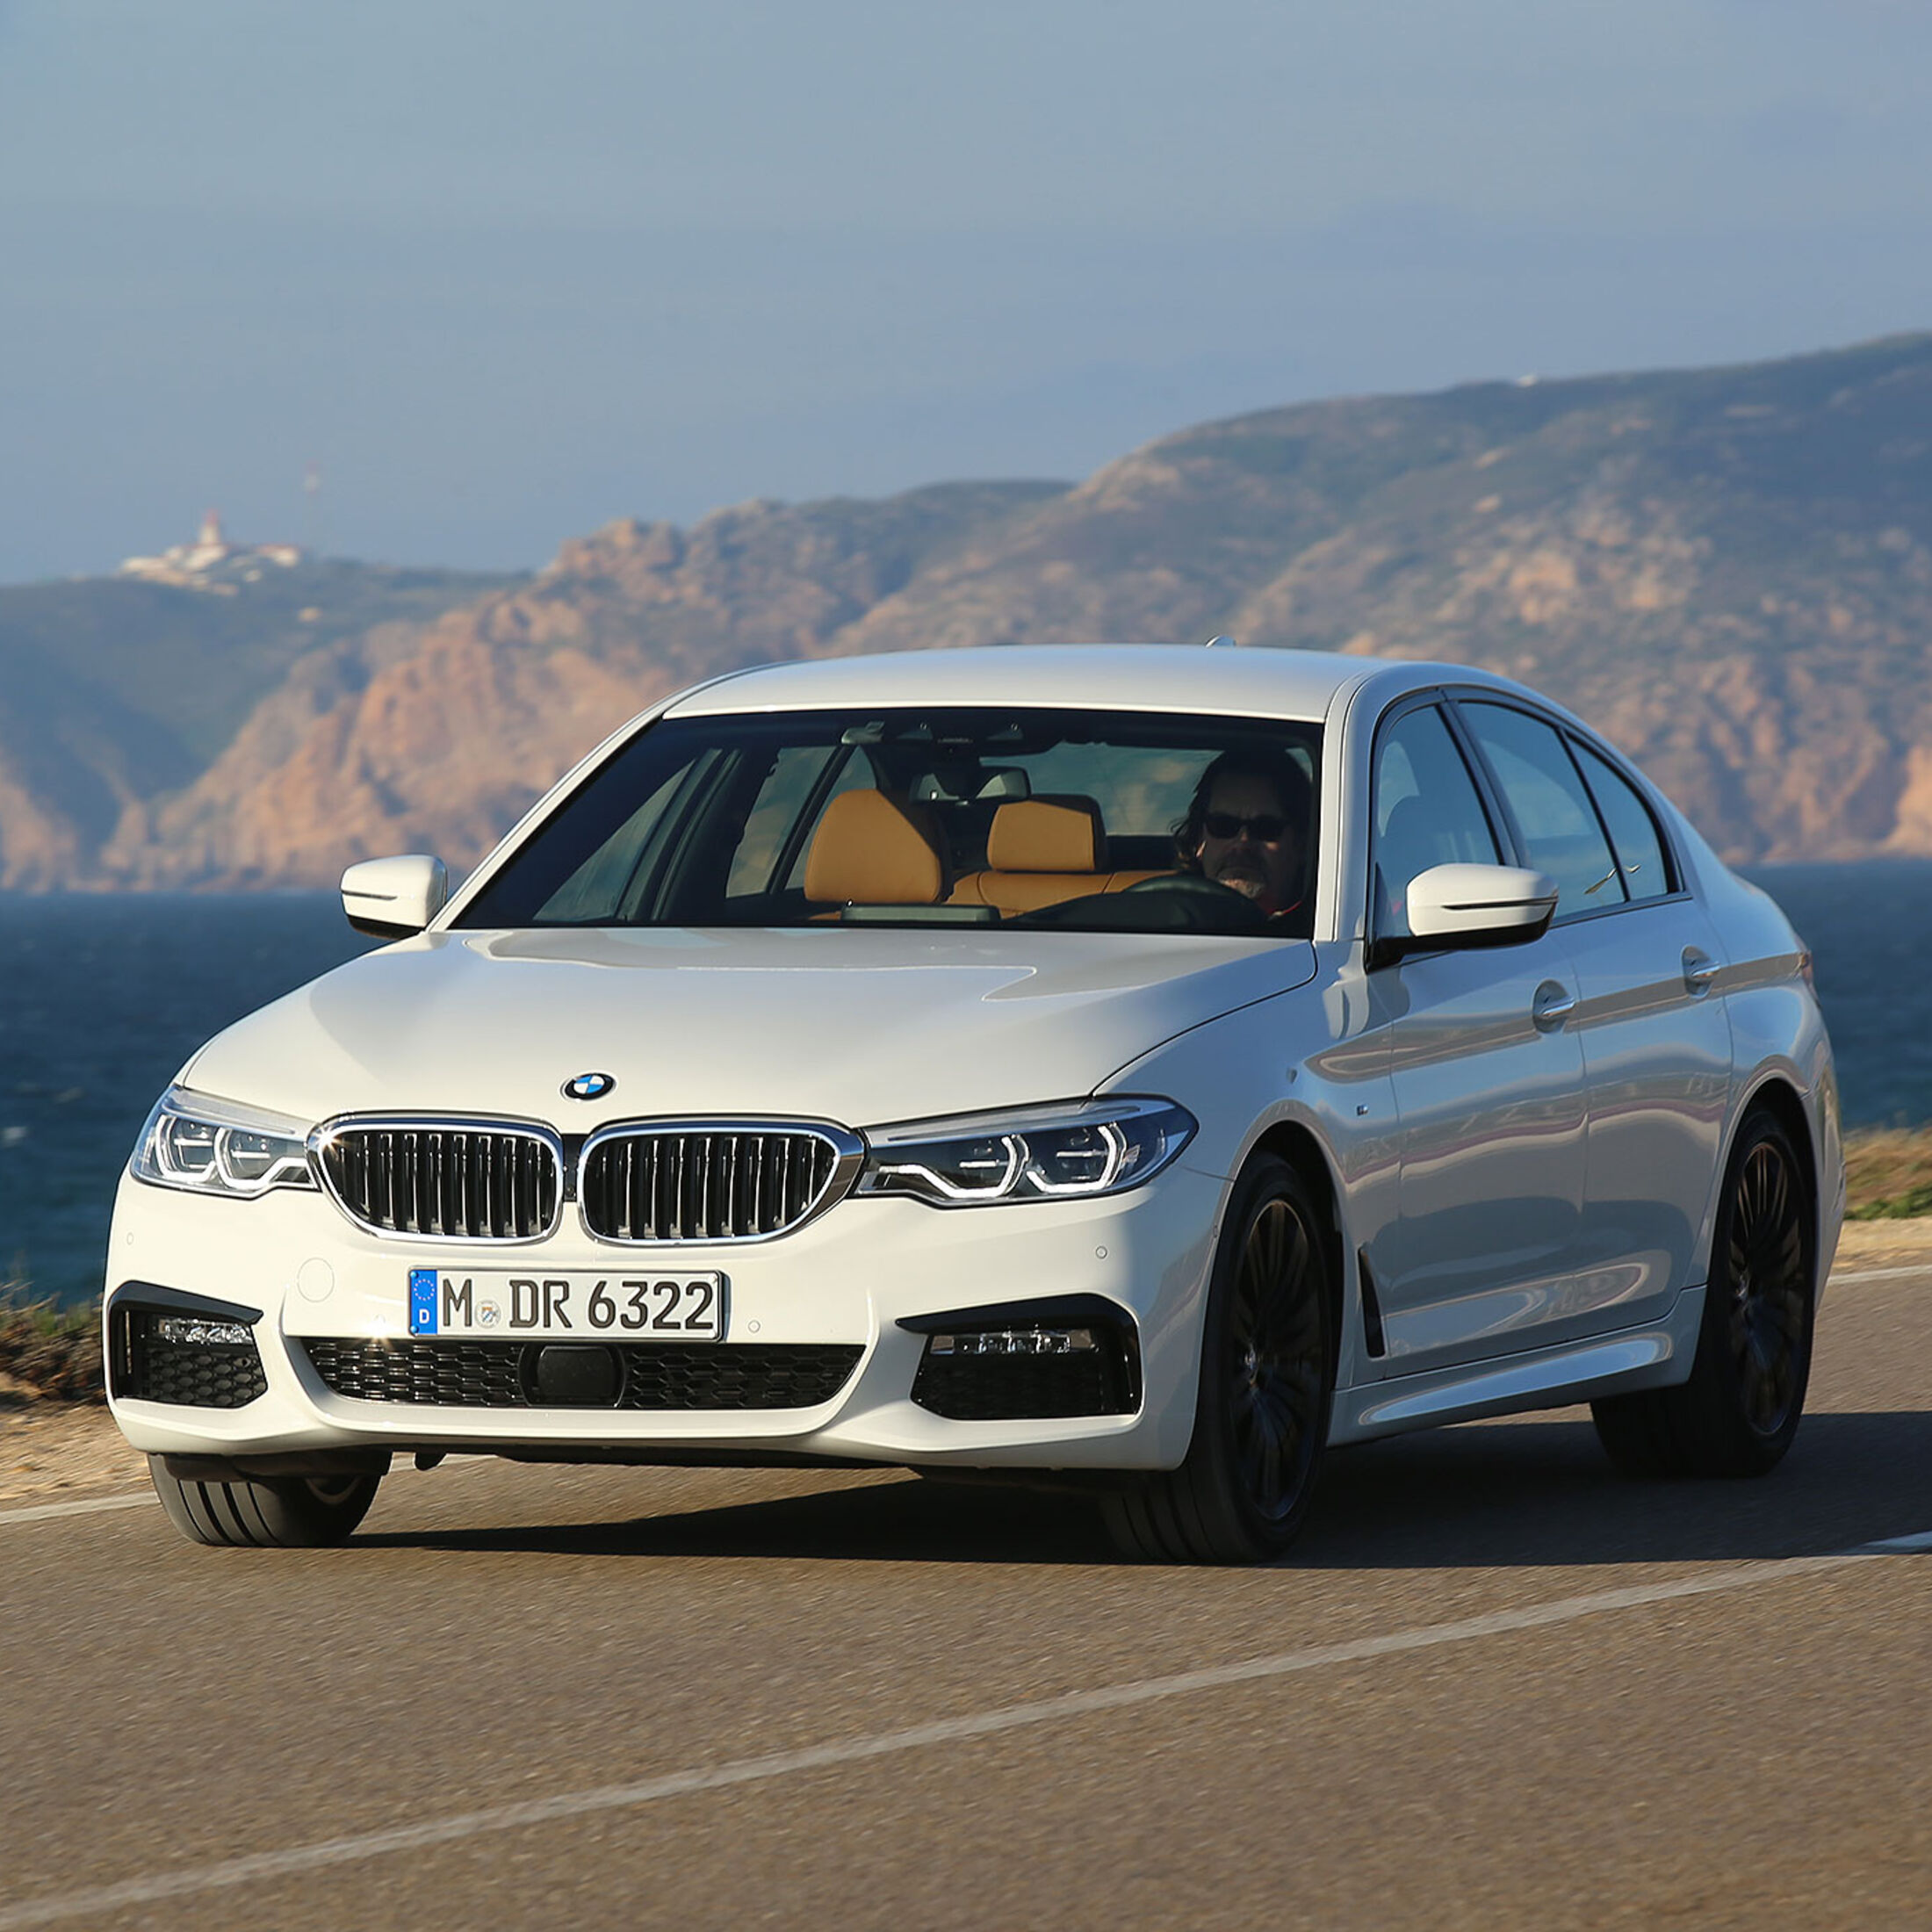 https://imgr1.auto-motor-und-sport.de/BMW-540i-G30-Limousine--jsonLd1x1-a6b18de9-993349.jpg